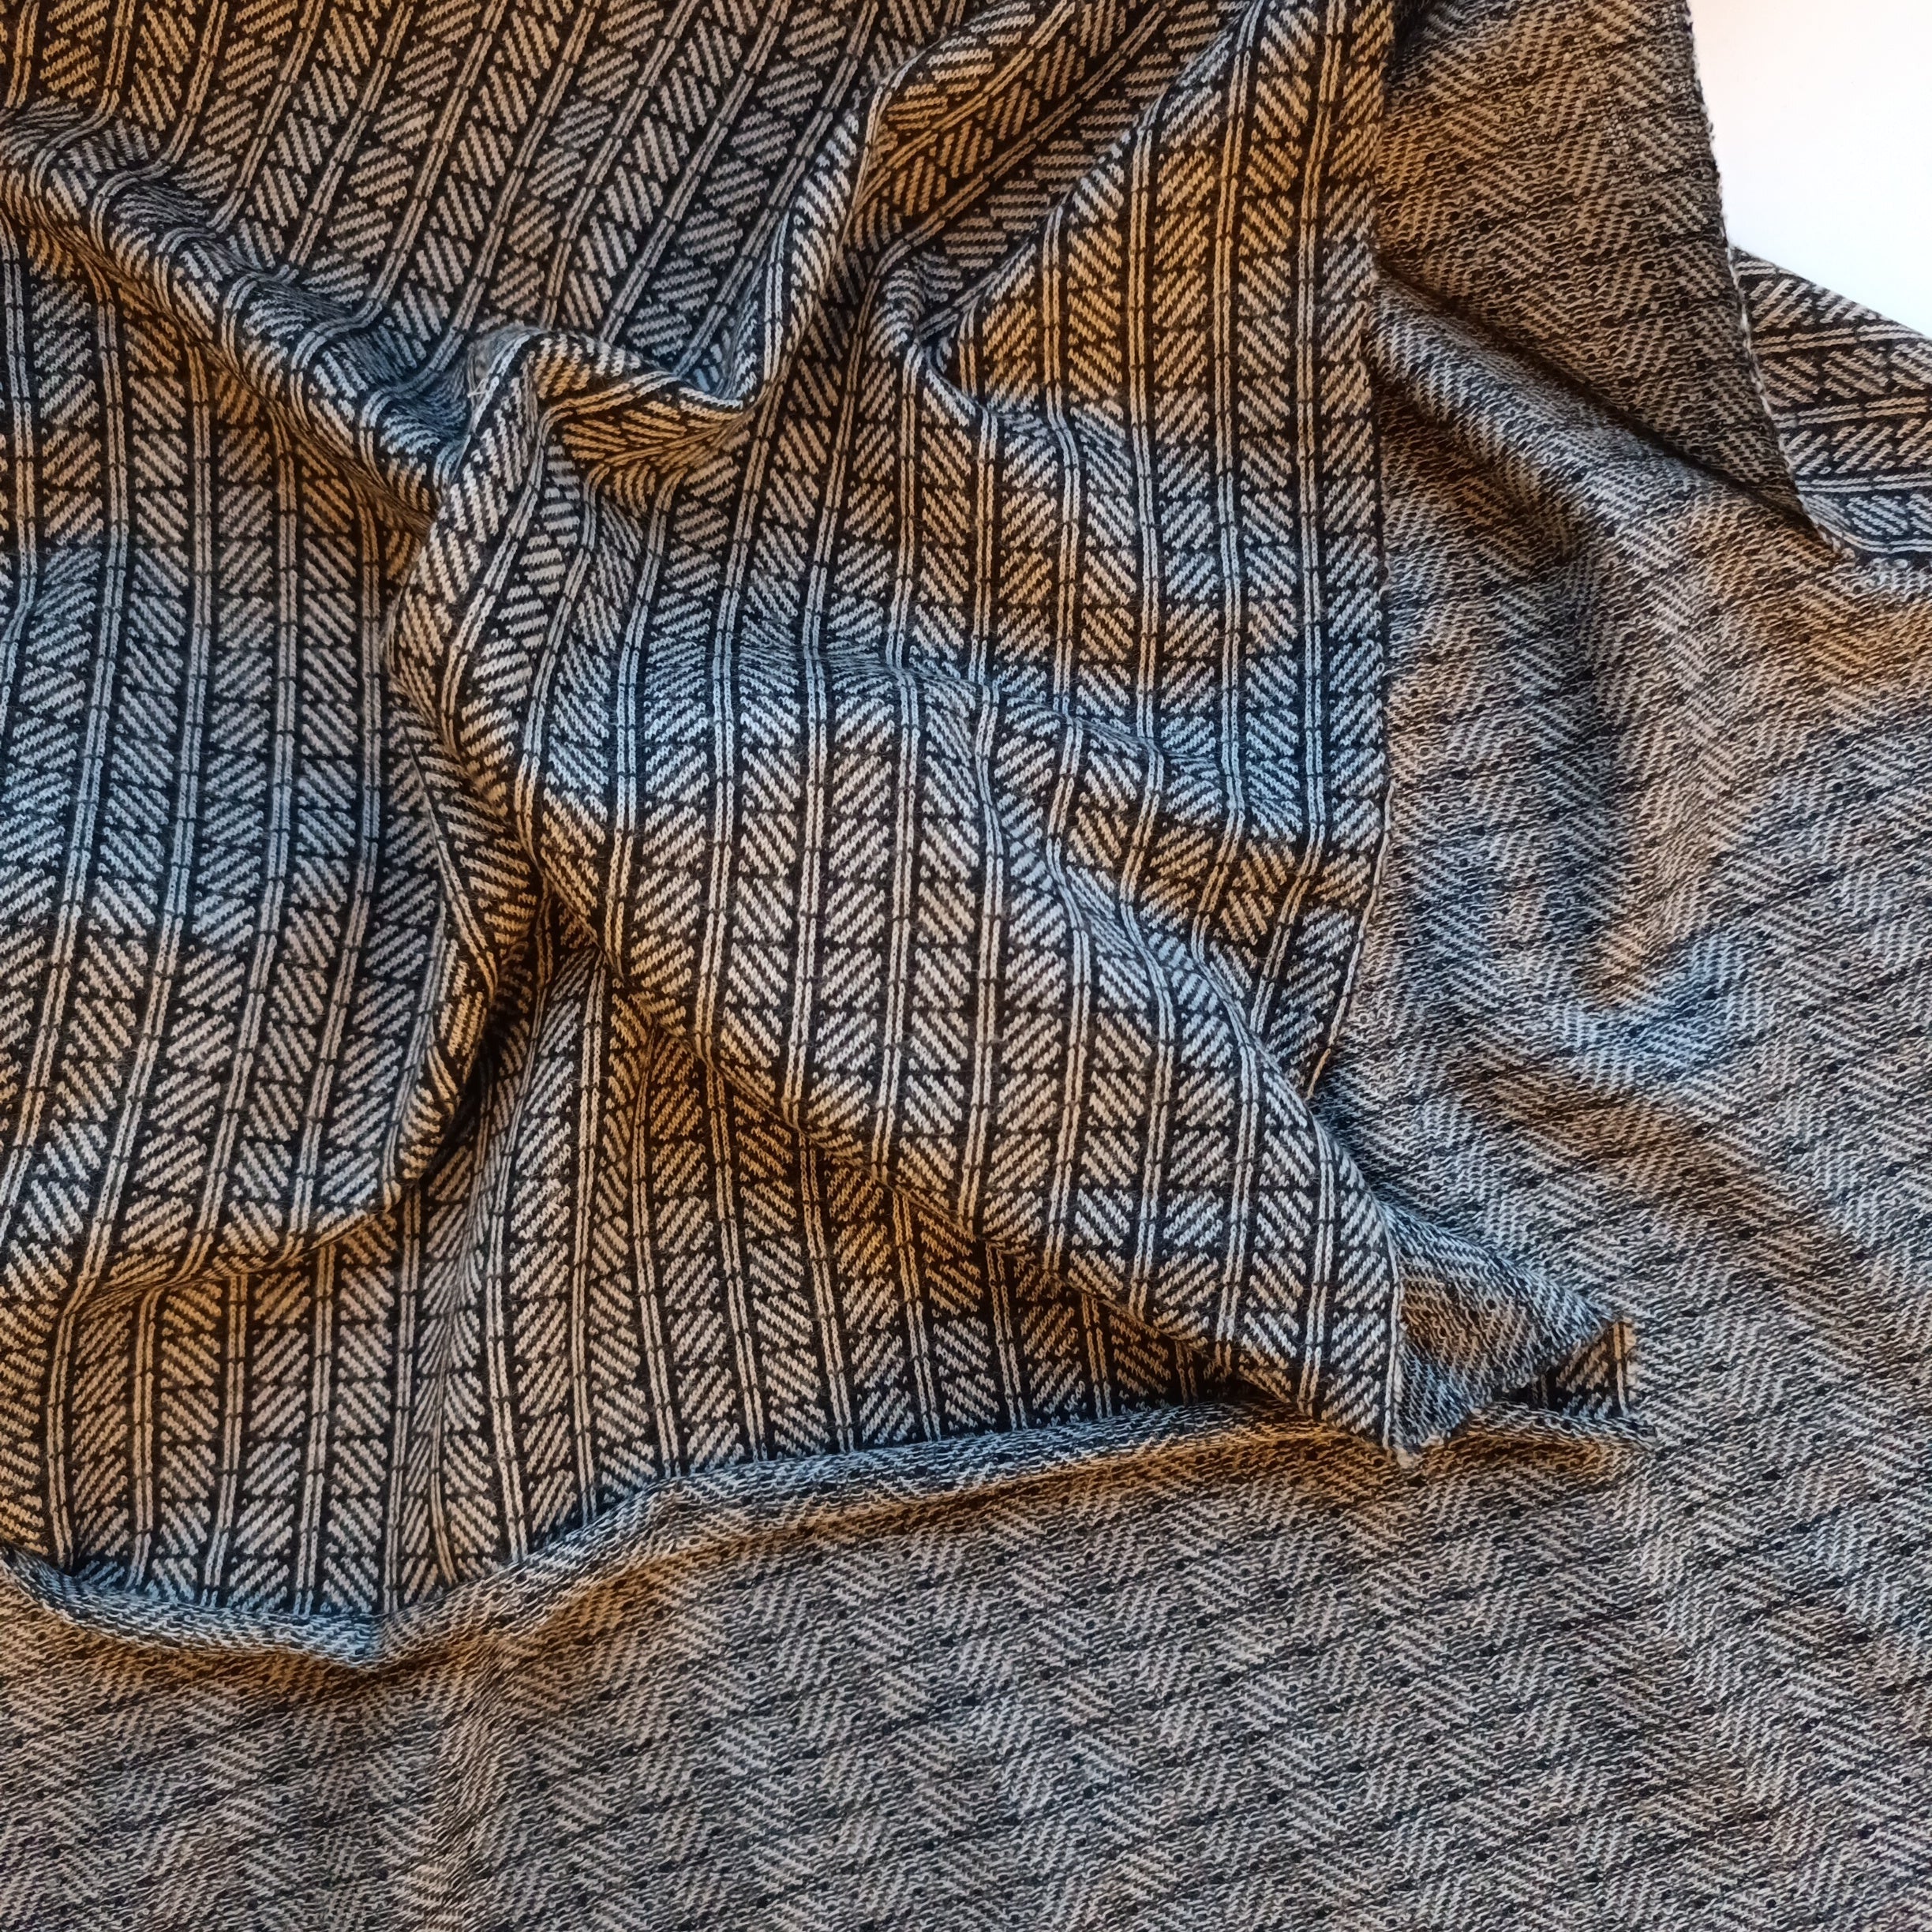 No. 189 viscose knit / 240 cm